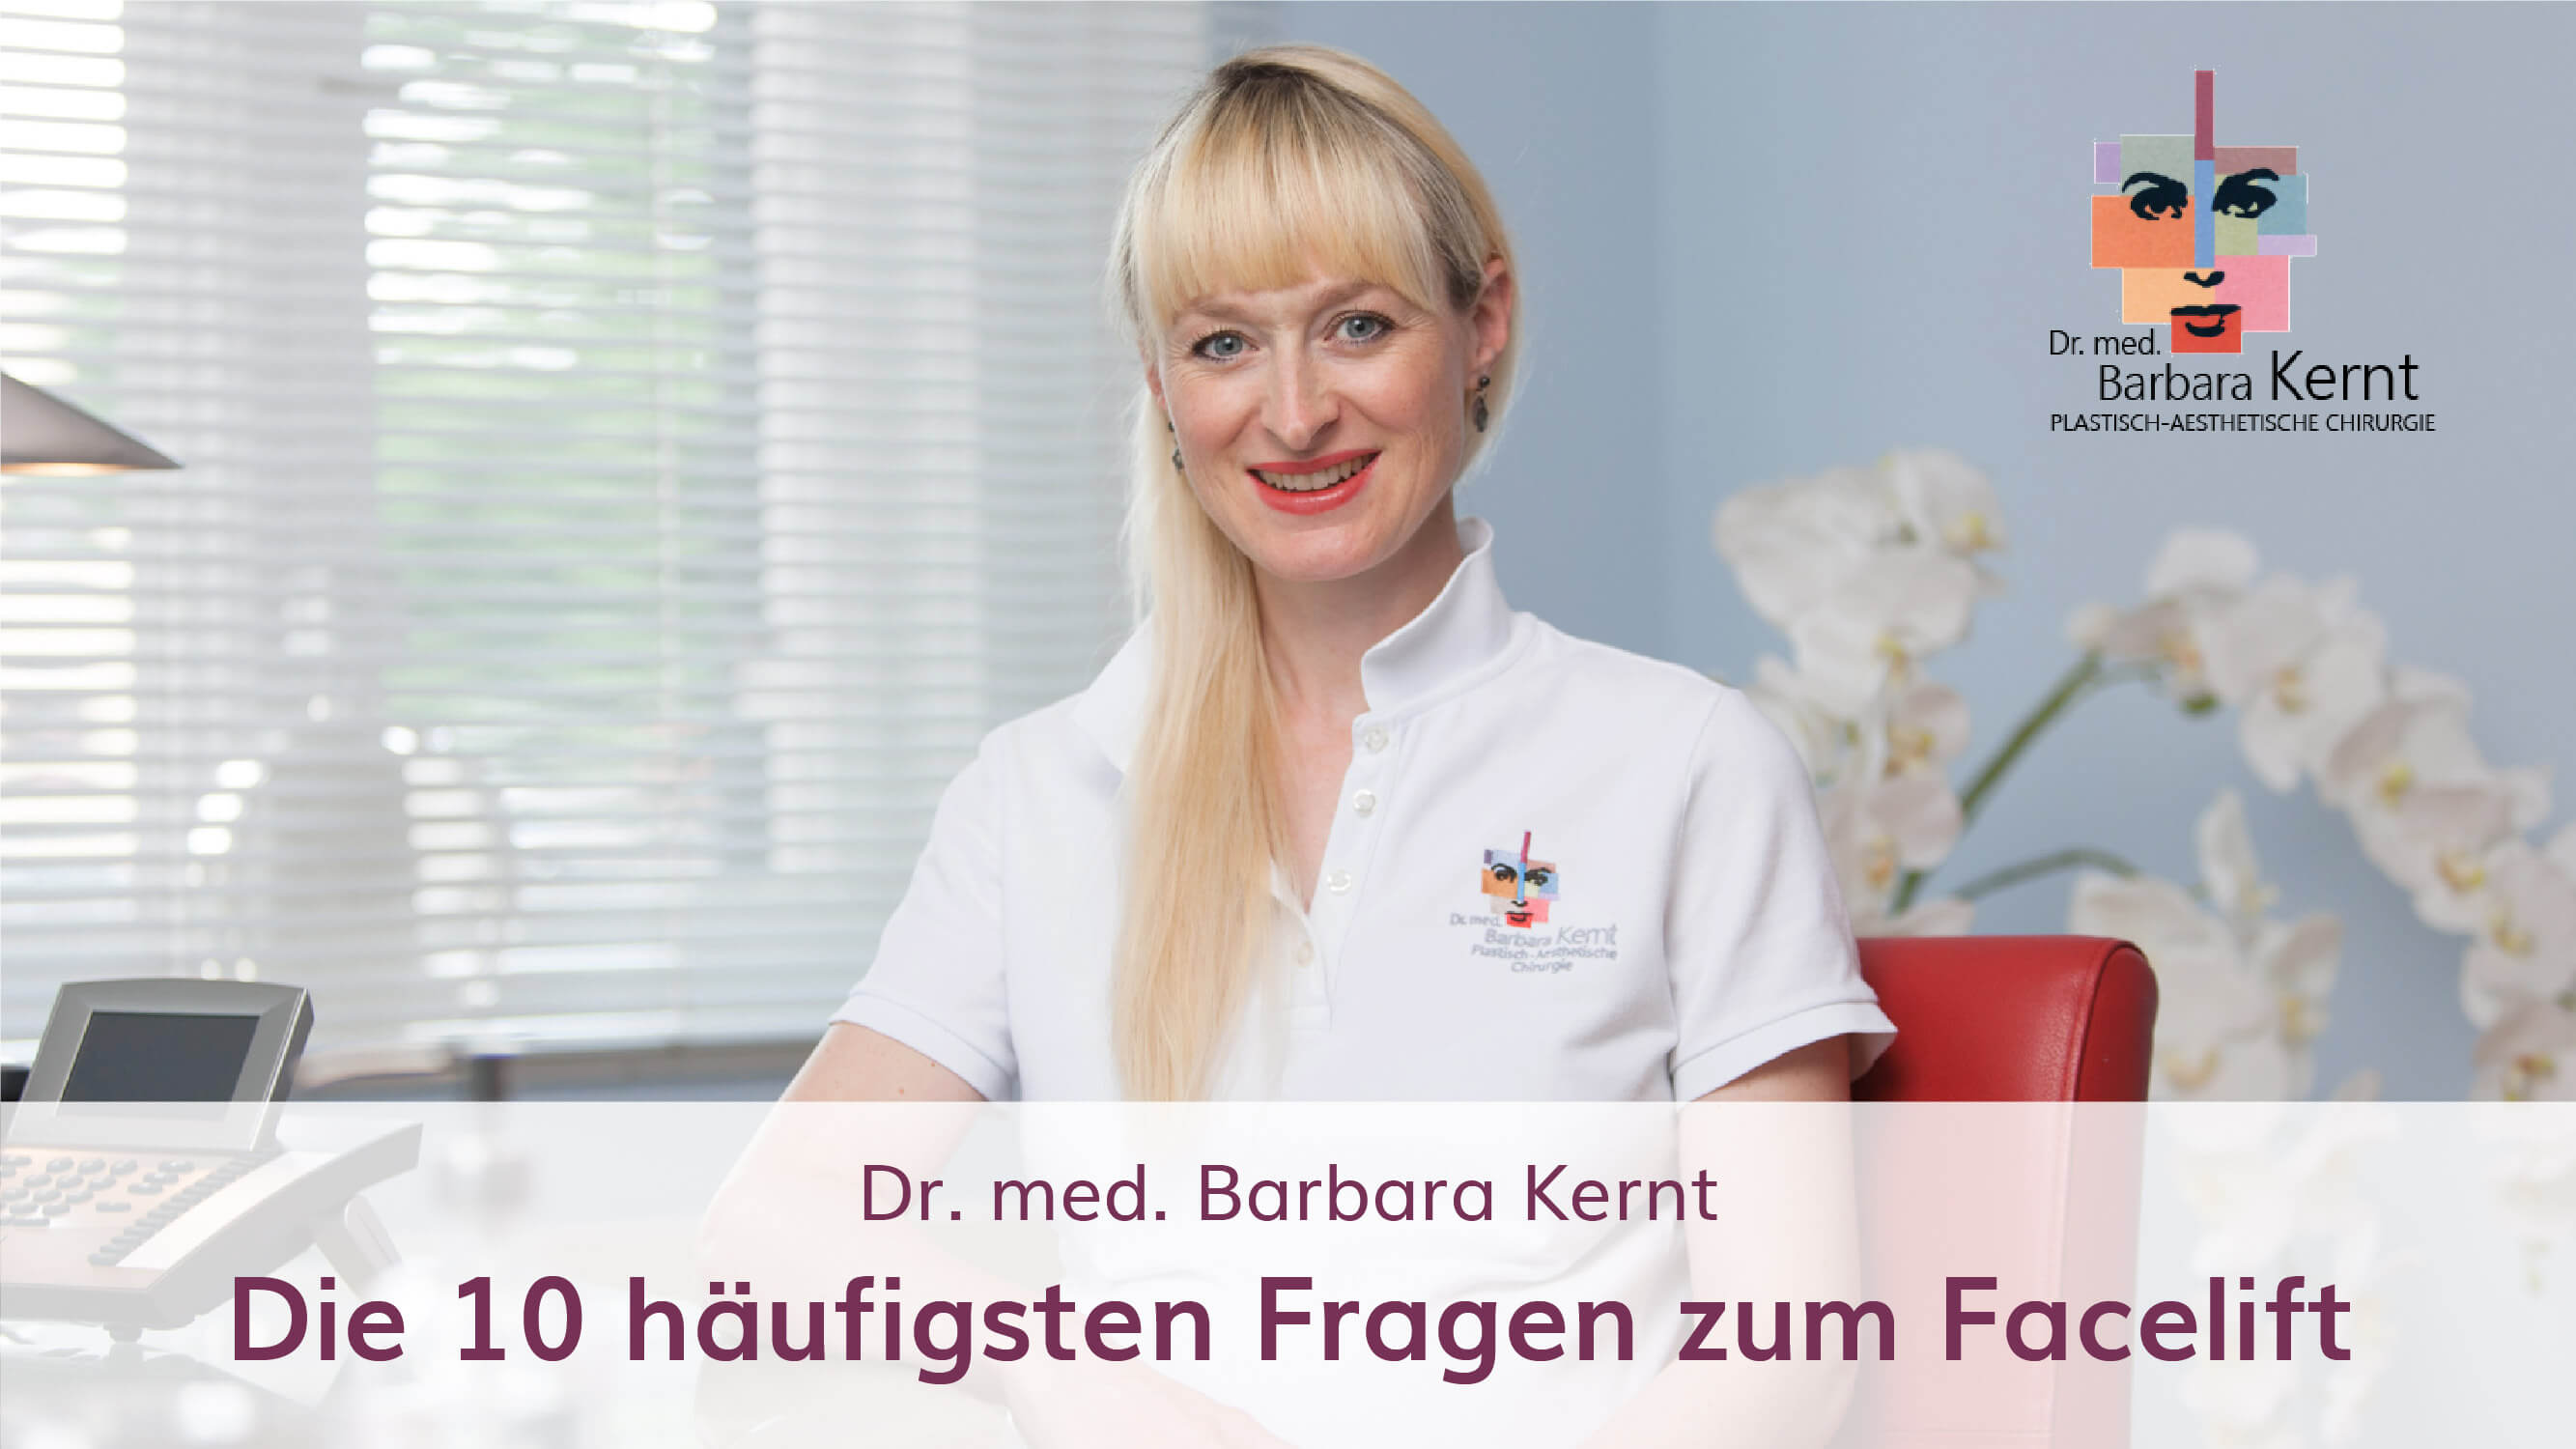 facelift münchen dr. barbara kernt plastische chirurgie